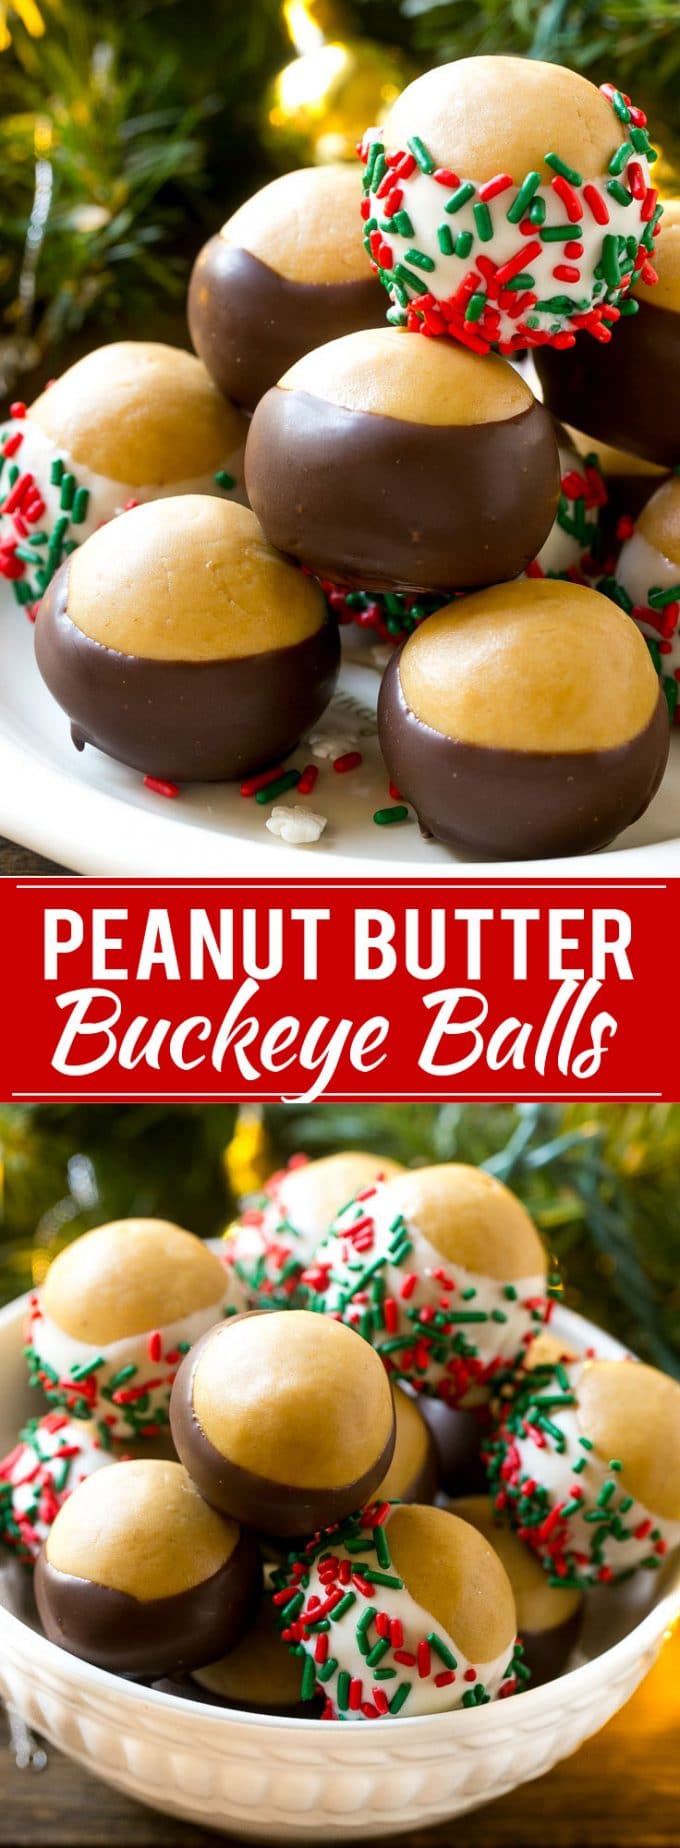  Buckeye Balls Recipe | Peanut Butter Balls Recipe | No Bake Peanut Butter Balls | Easy Peanut Butter Balls | Chocolate Covered Peanut Butter Balls #peanutbutter #balls #buckeyeballs #cookies #dessert #dinneratthezoo #nobake #nobakecookies